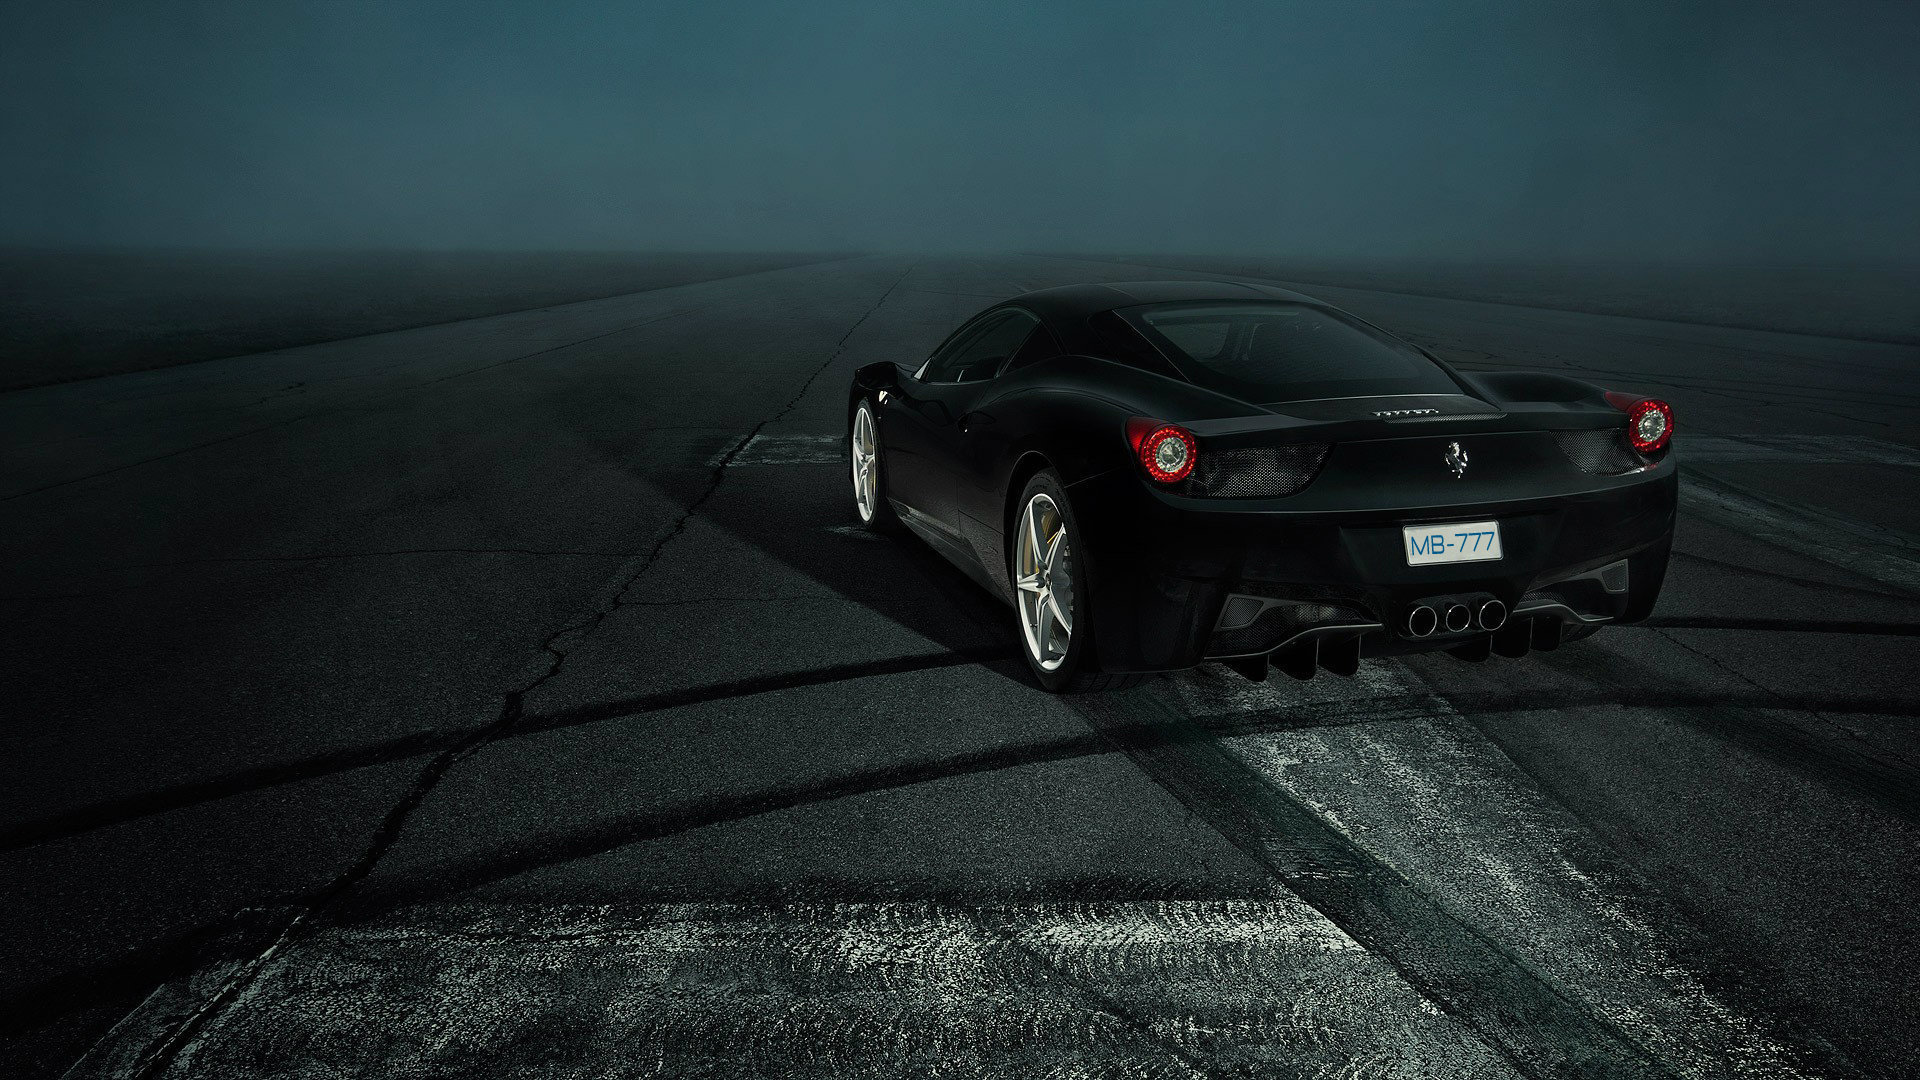 Awesome Ferrari 458 Italia free background ID:92490 for full hd 1920x1080 PC